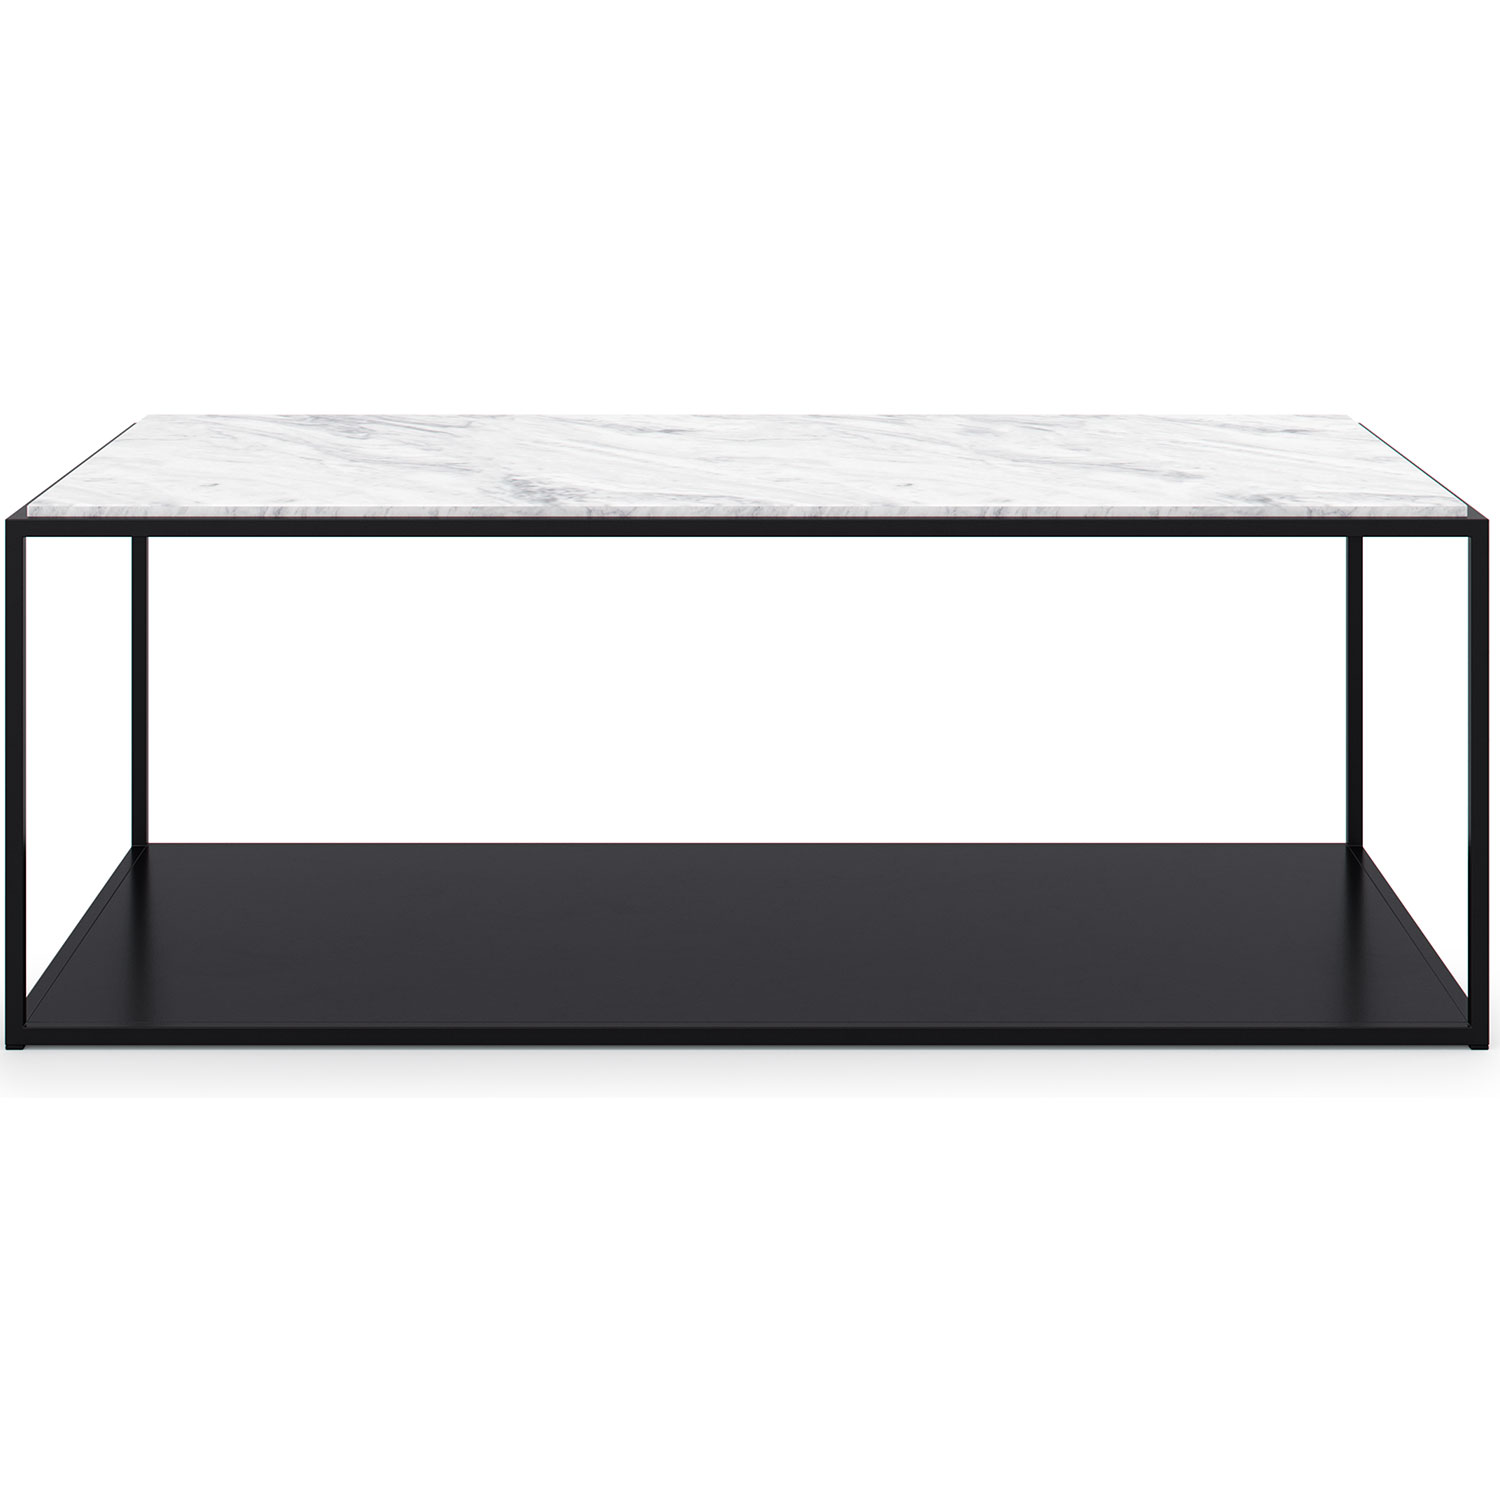 Soffbord 1230x630cm, Black/White Marble - @ RoyalDesign.dk